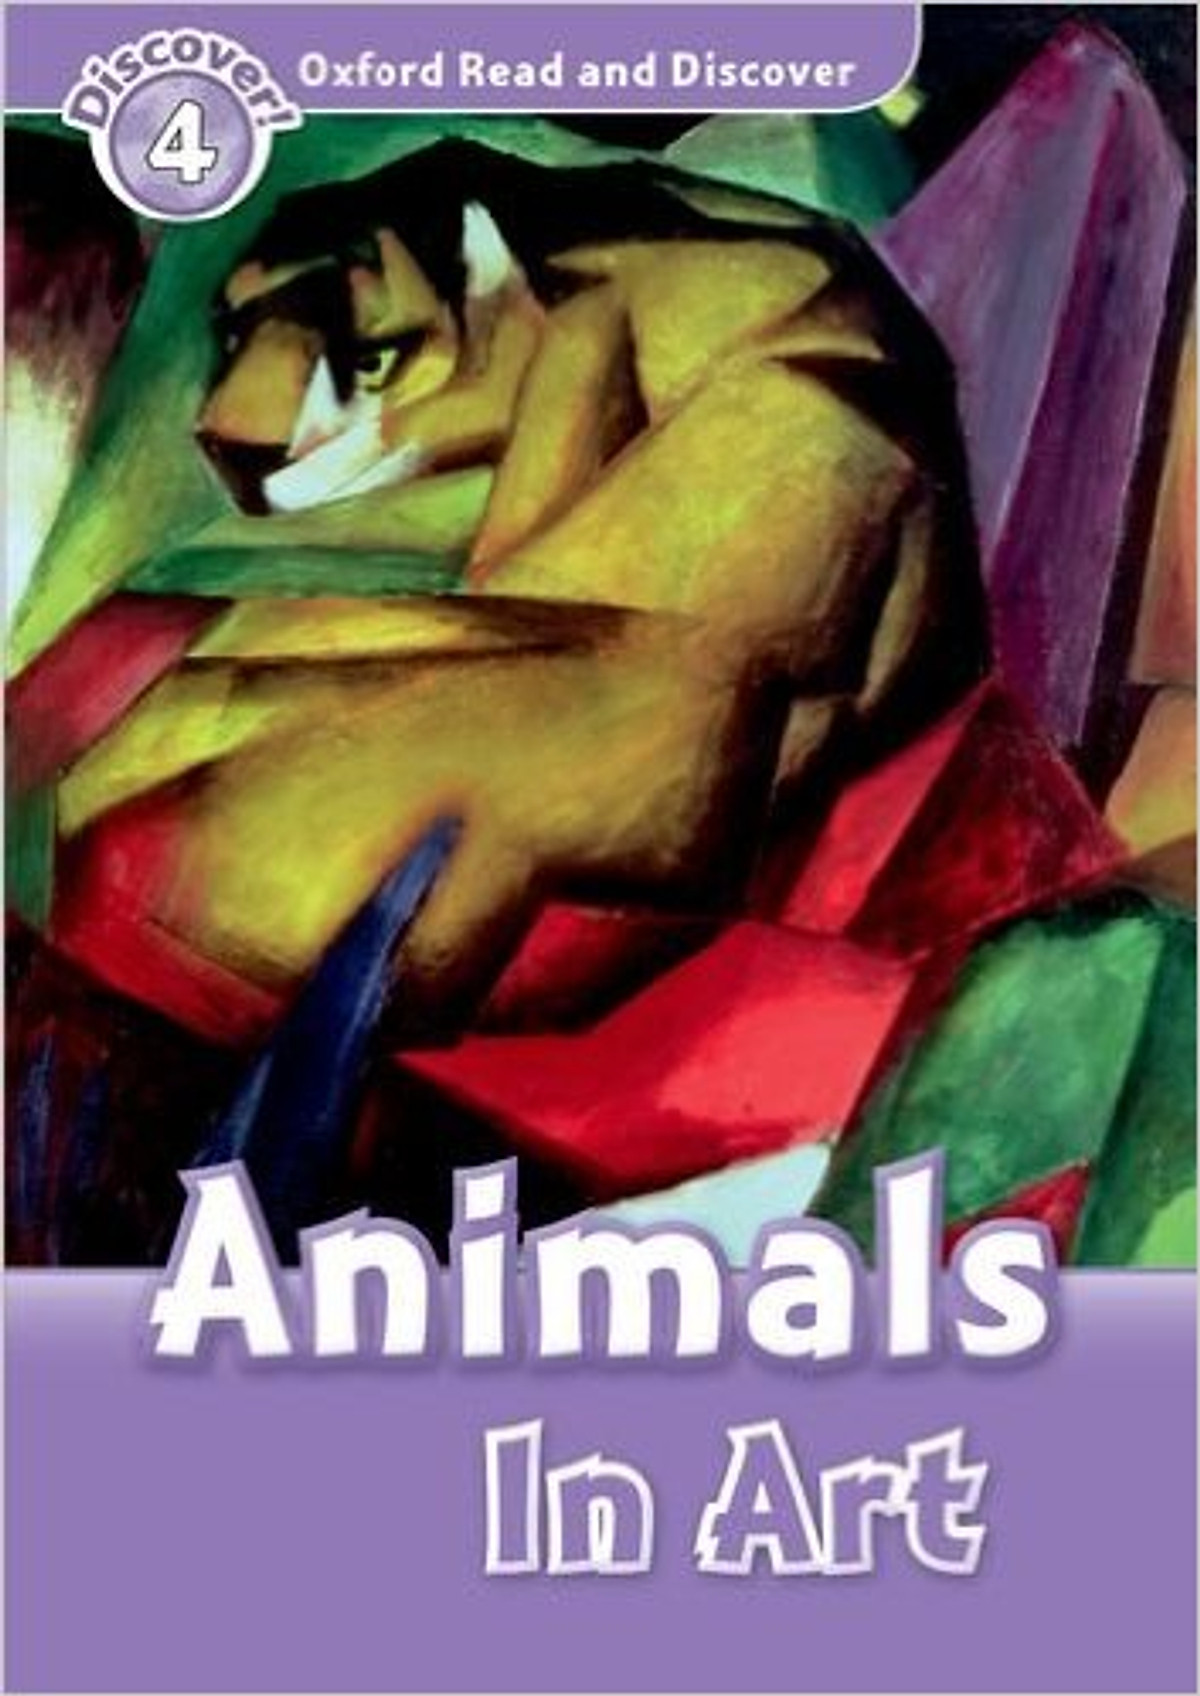 Mua Oxford Read and Discover 4: Animals In Art tại CDIMEX